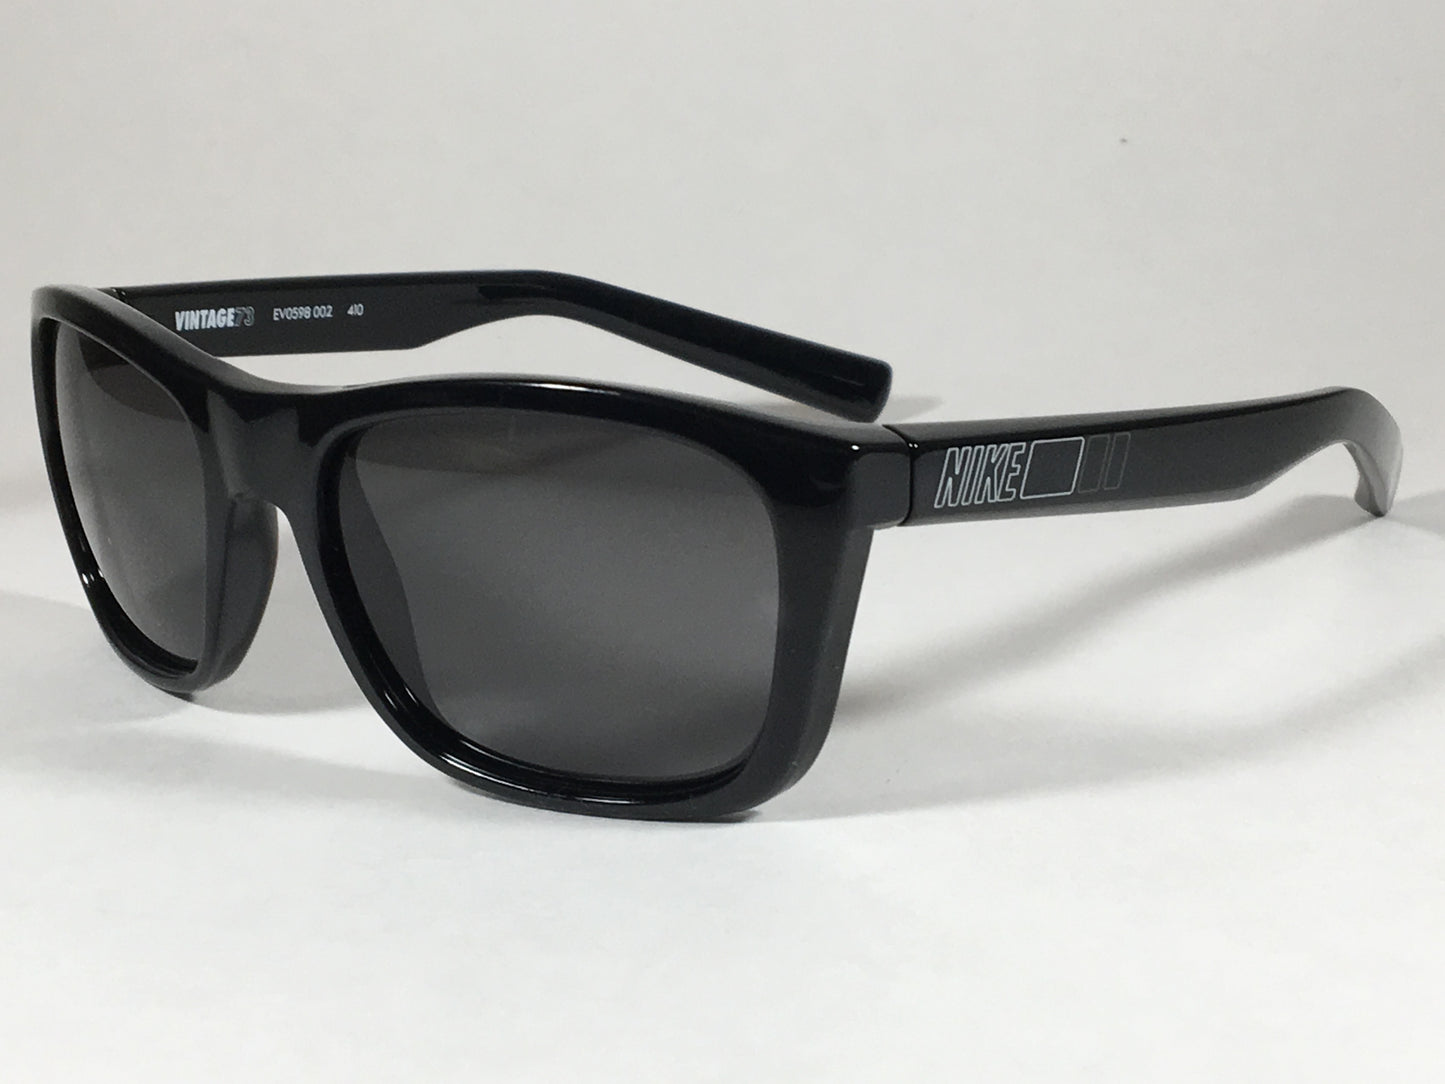 Nike Vintage 73 Square Sunglasses Ev0598 002 410 Black Gloss Frame Gray Lens - Sunglasses